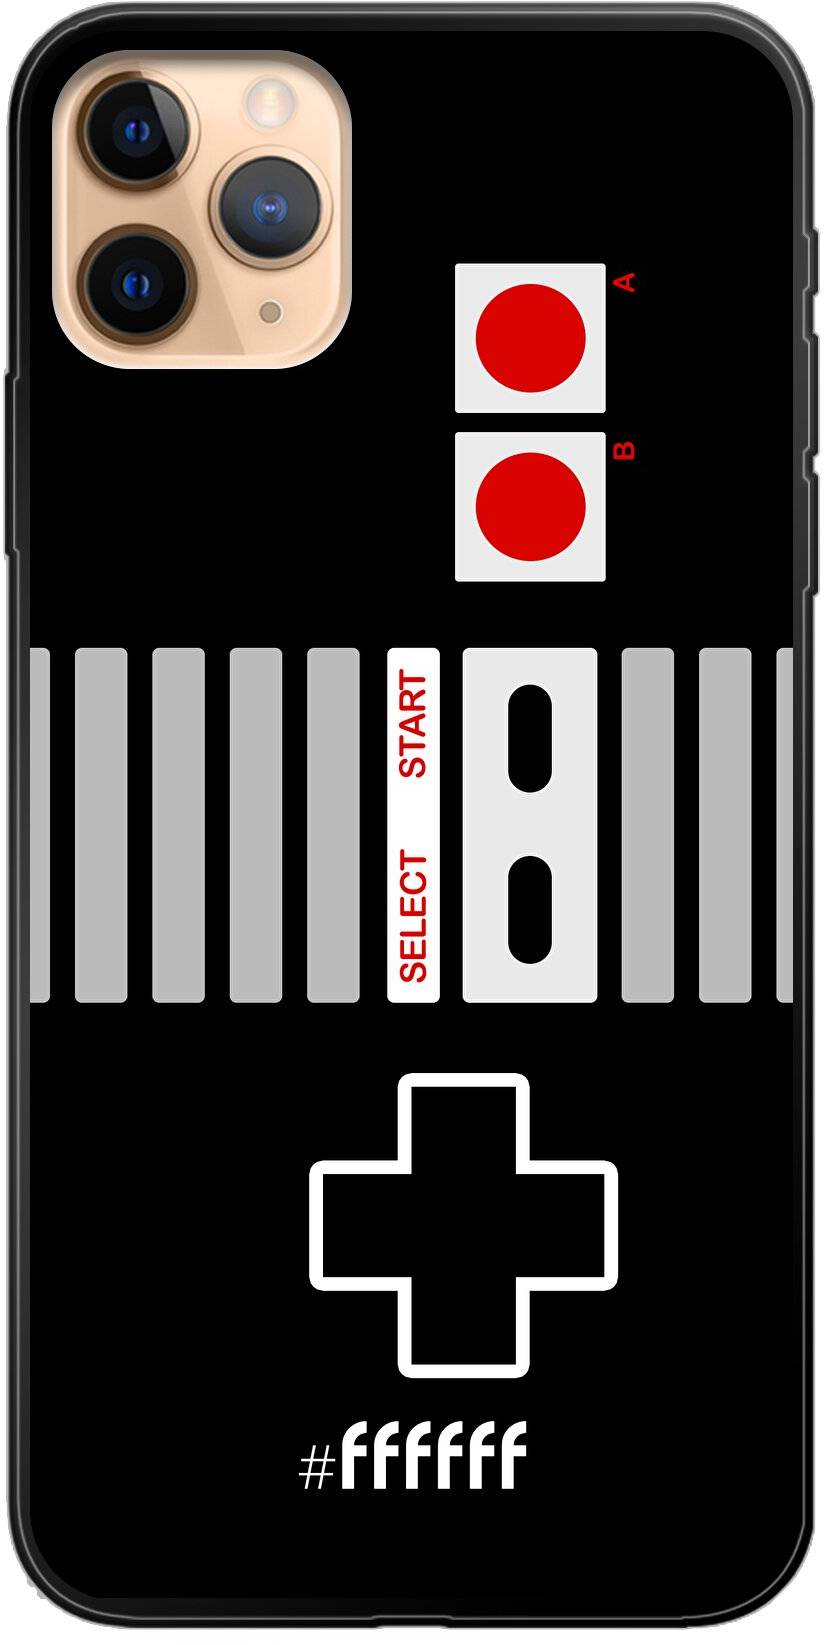 NES Controller iPhone 11 Pro Max